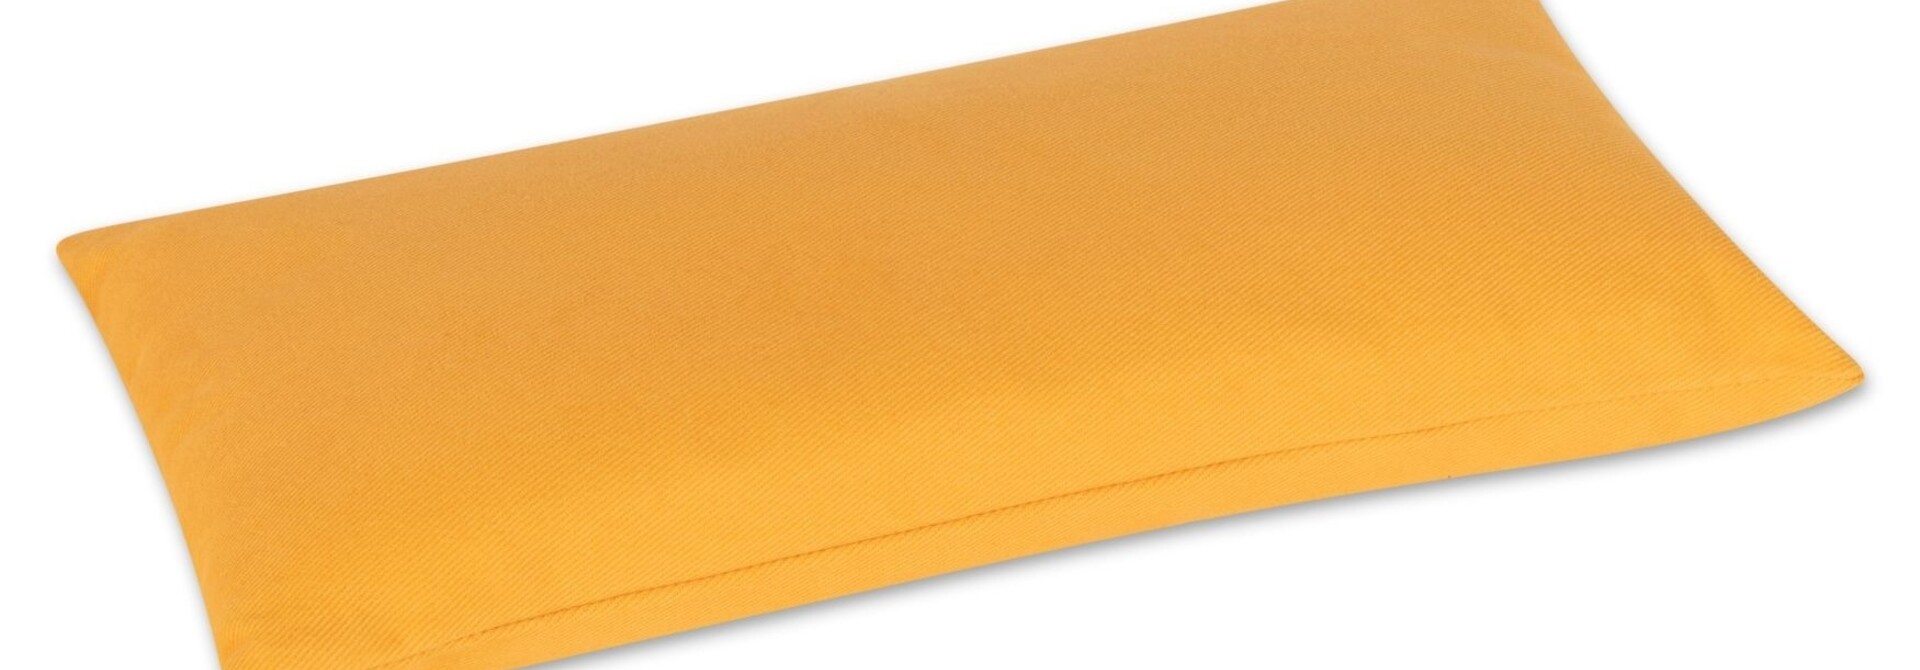 Yogisha Meditation Bench Cushion Deluxe - Yellow